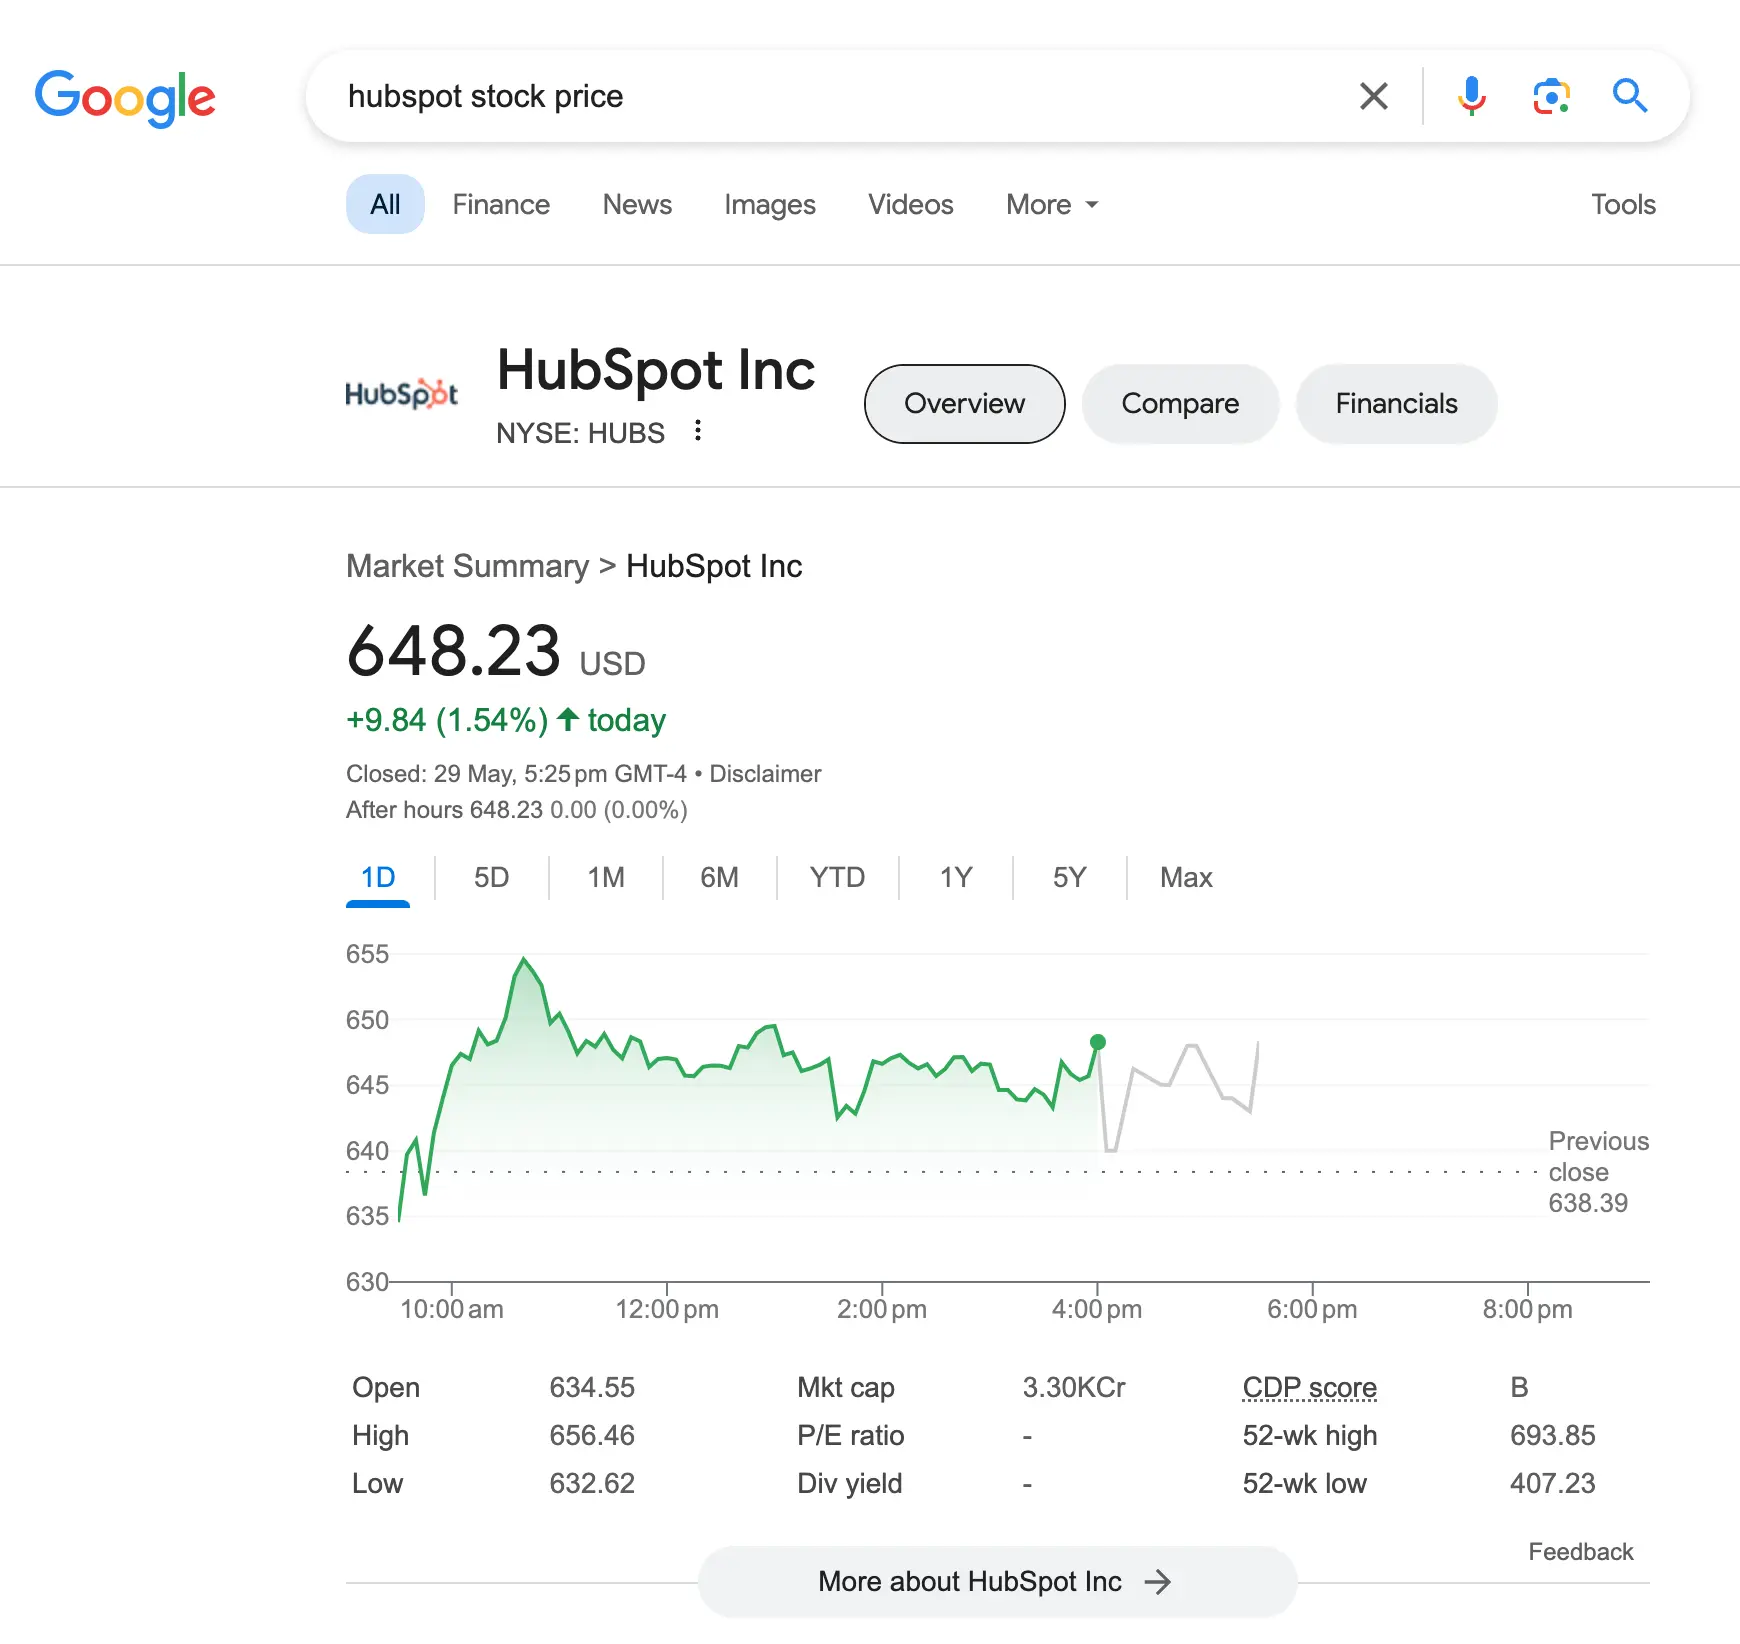 hubspot stock price google acquistion rumors